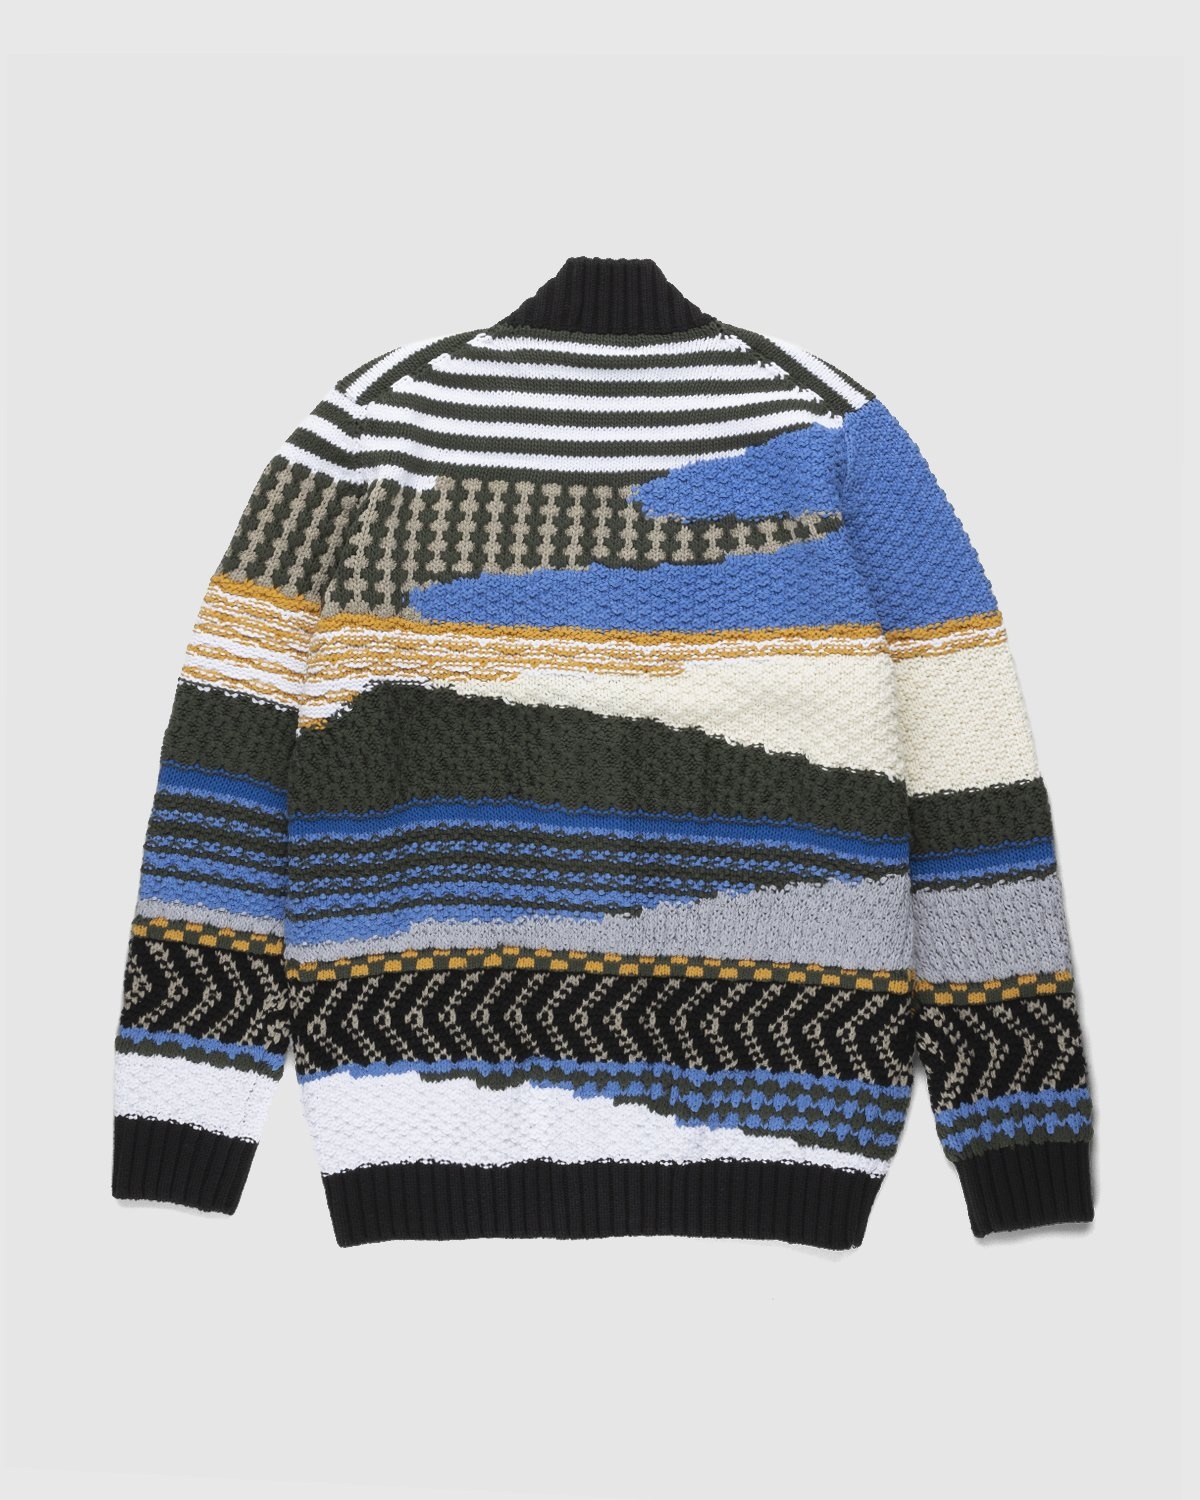 Missoni – Intarsia Cardigan Multicolor - Knitwear - Multi - Image 2